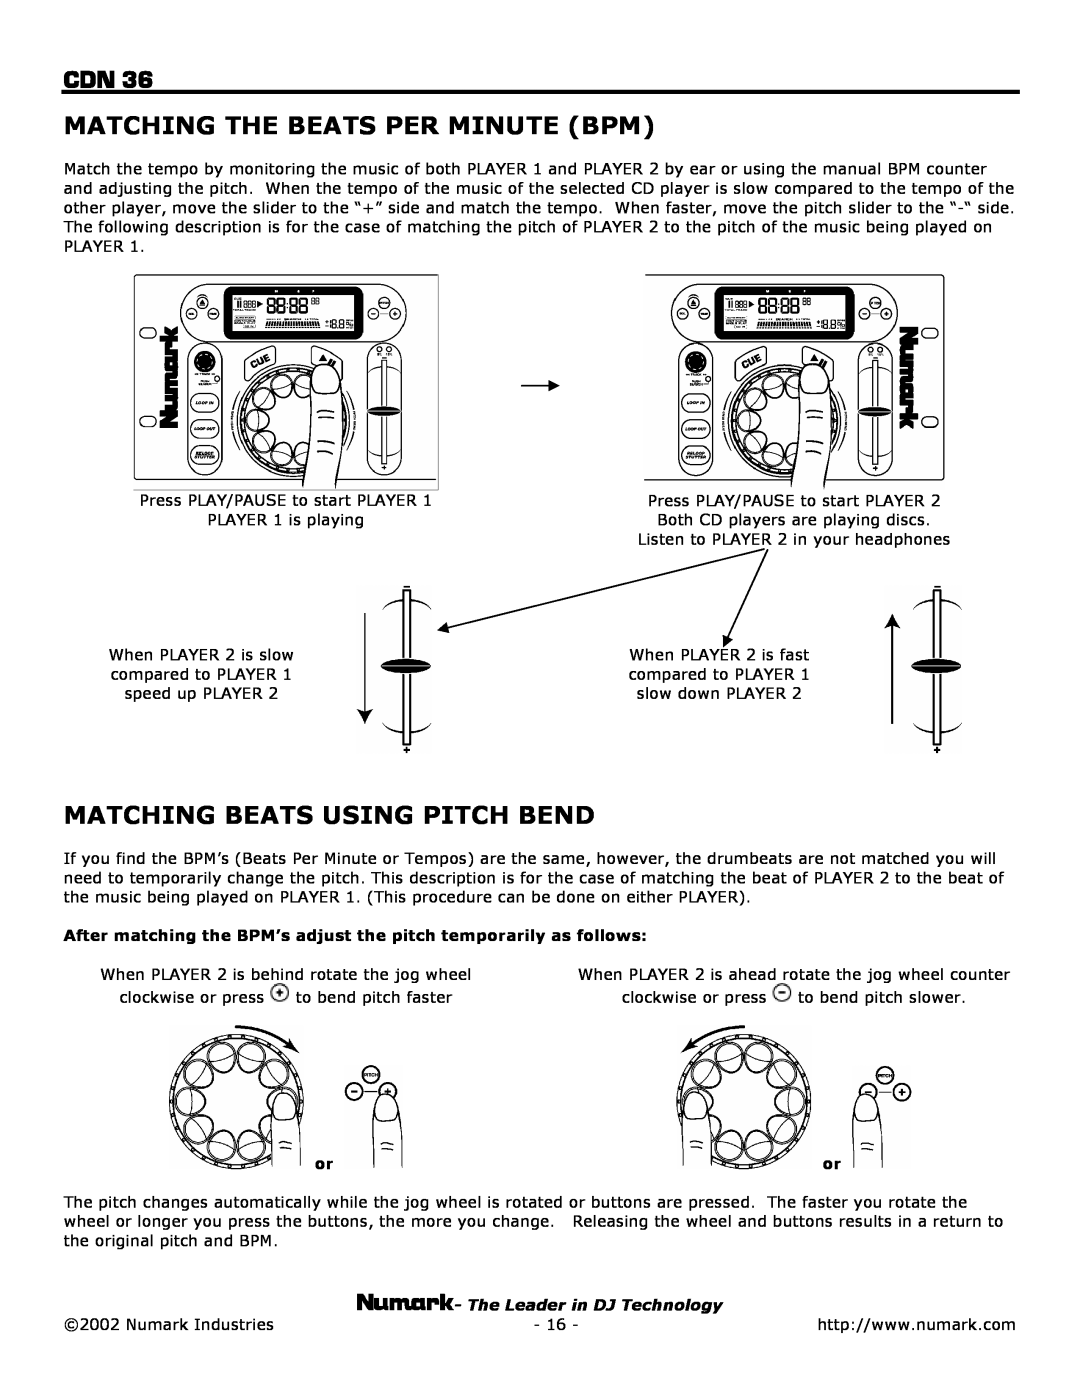 Numark Industries CDN 36 owner manual Matching The Beats Per Minute Bpm, Matching Beats Using Pitch Bend 